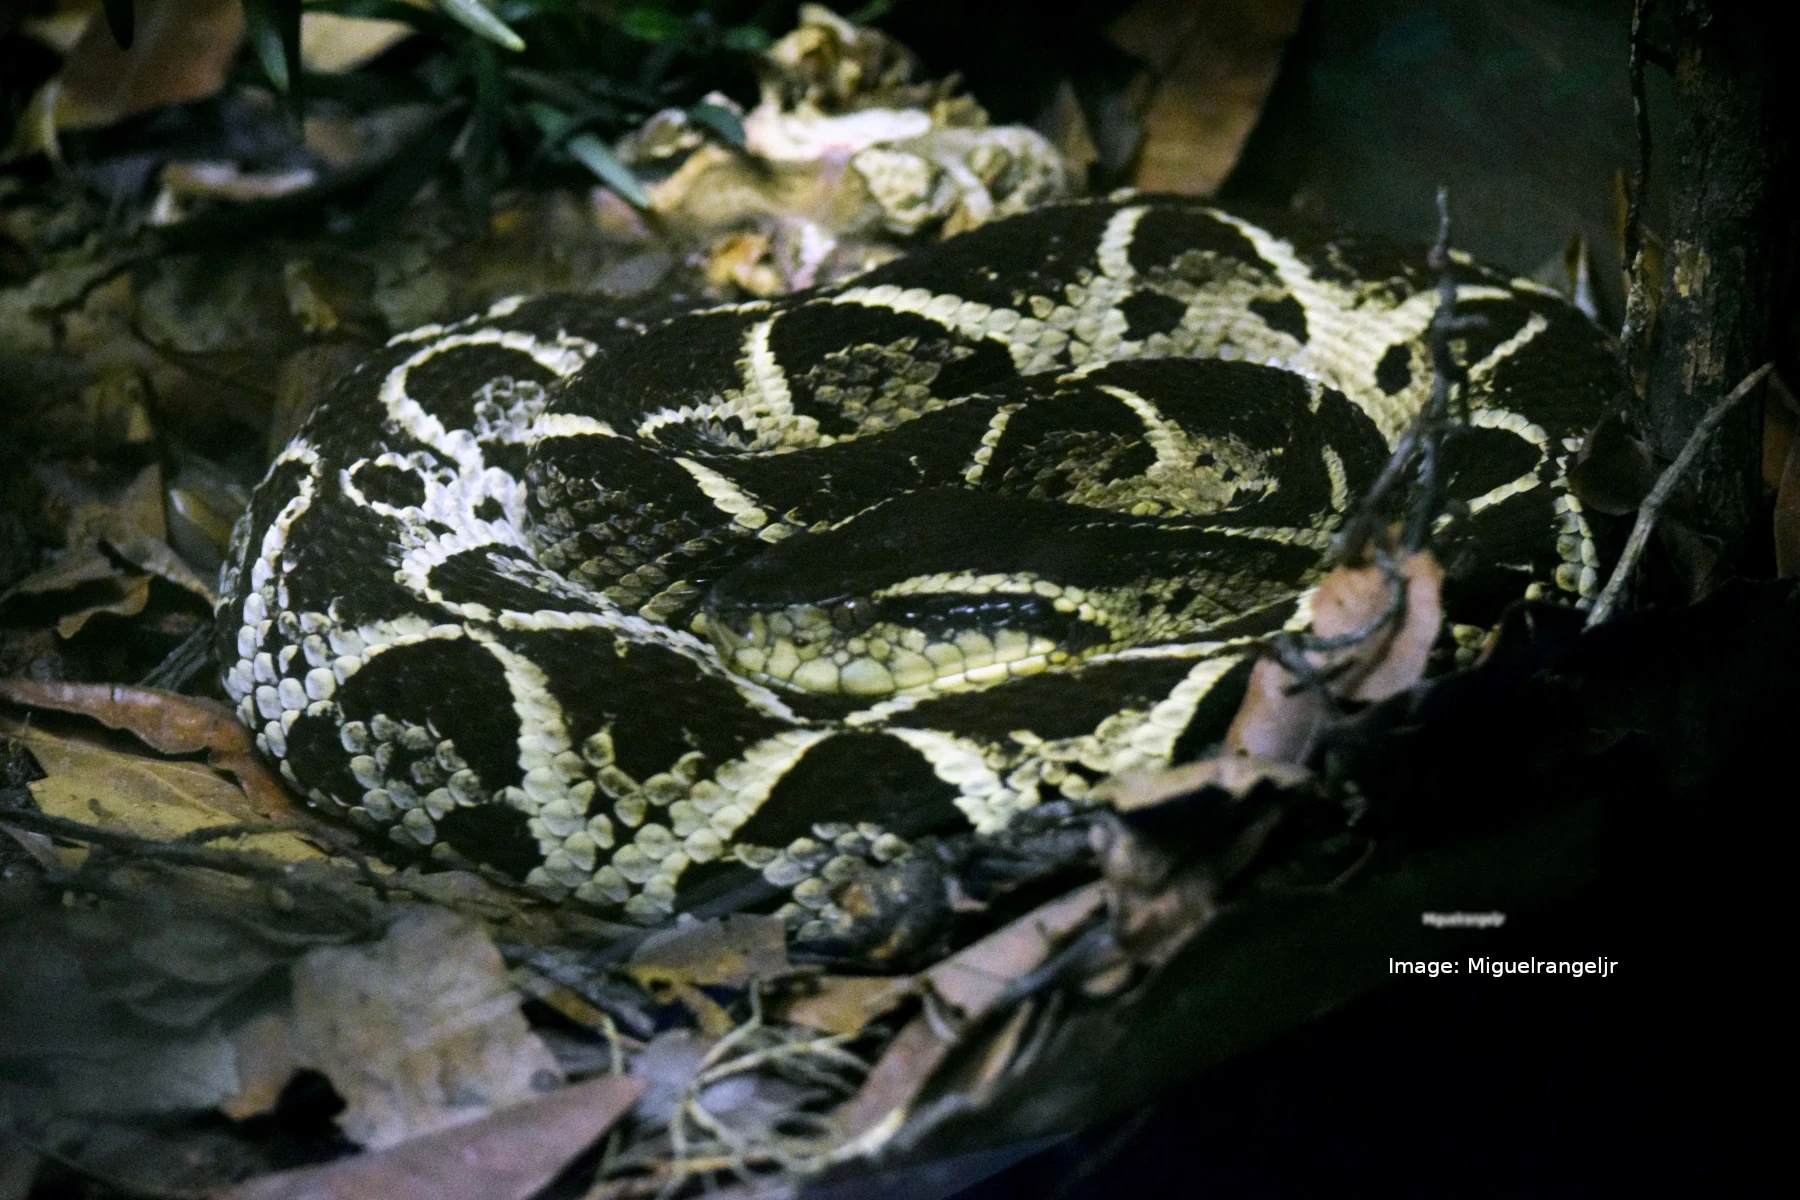 jararacussu snake